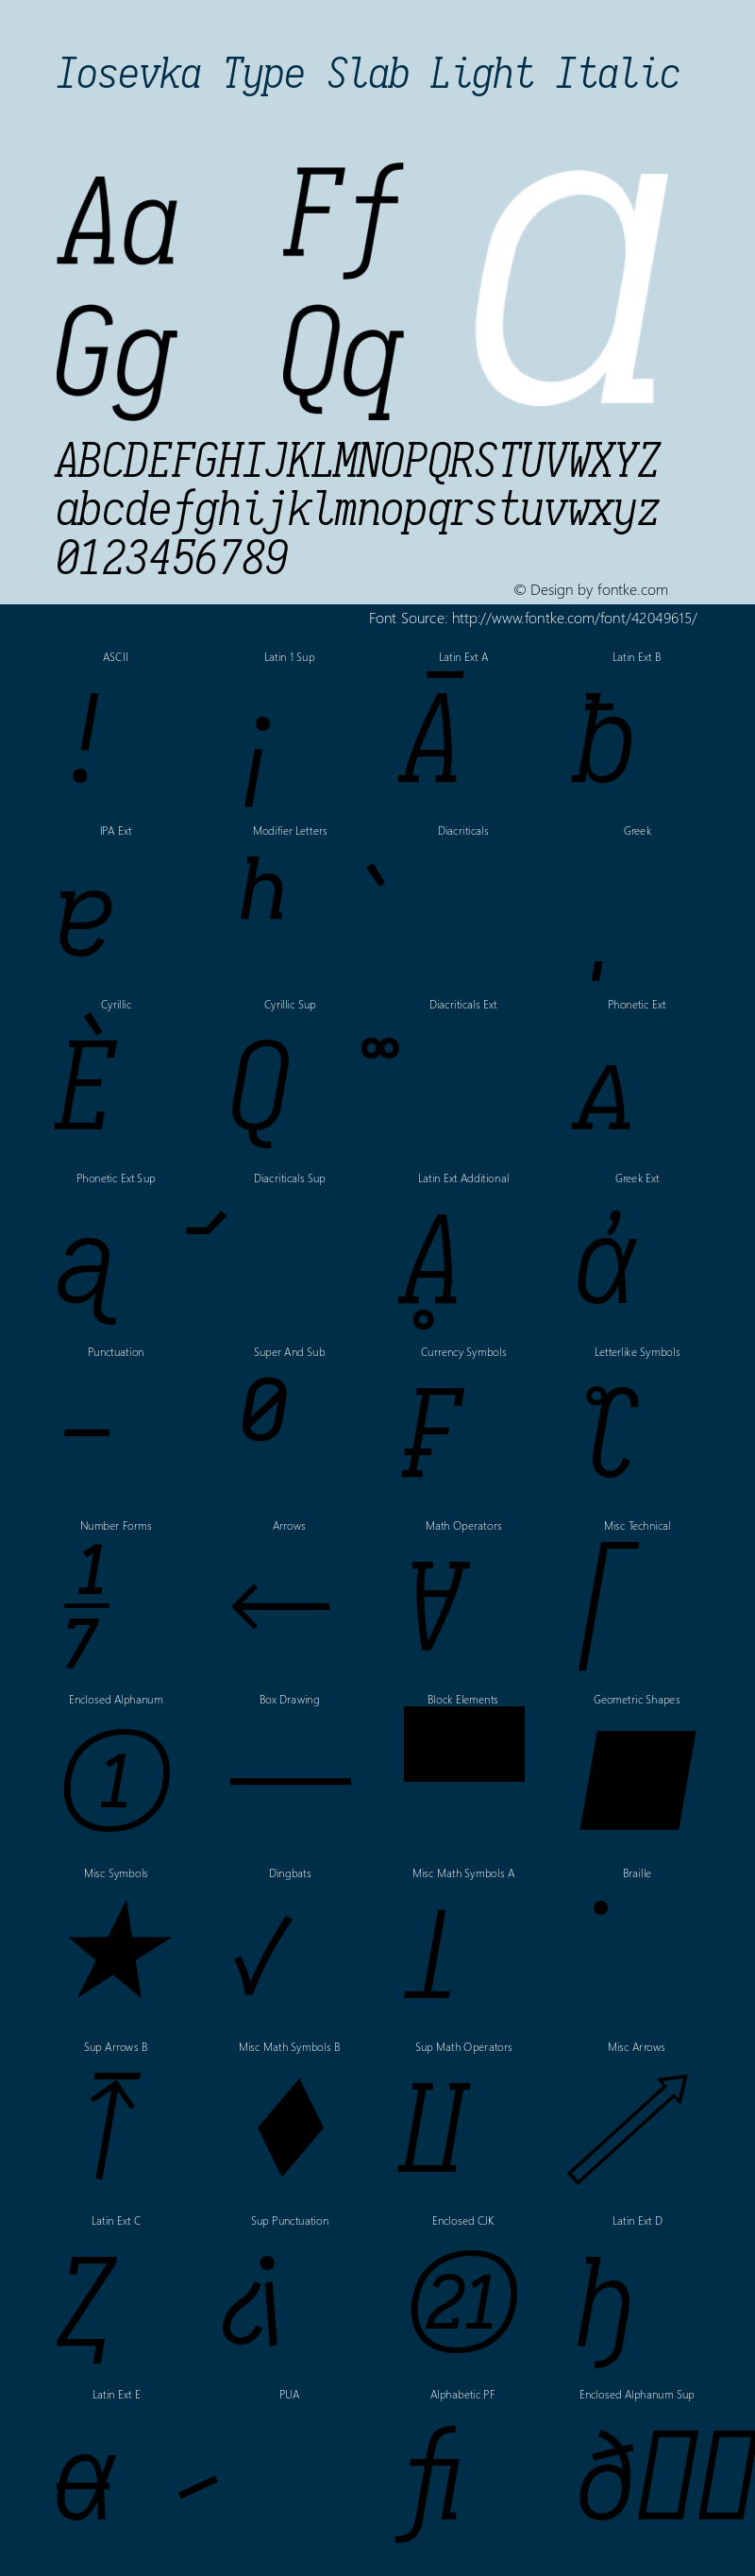 Iosevka Type Slab Light Italic 2.3.2 Font Sample